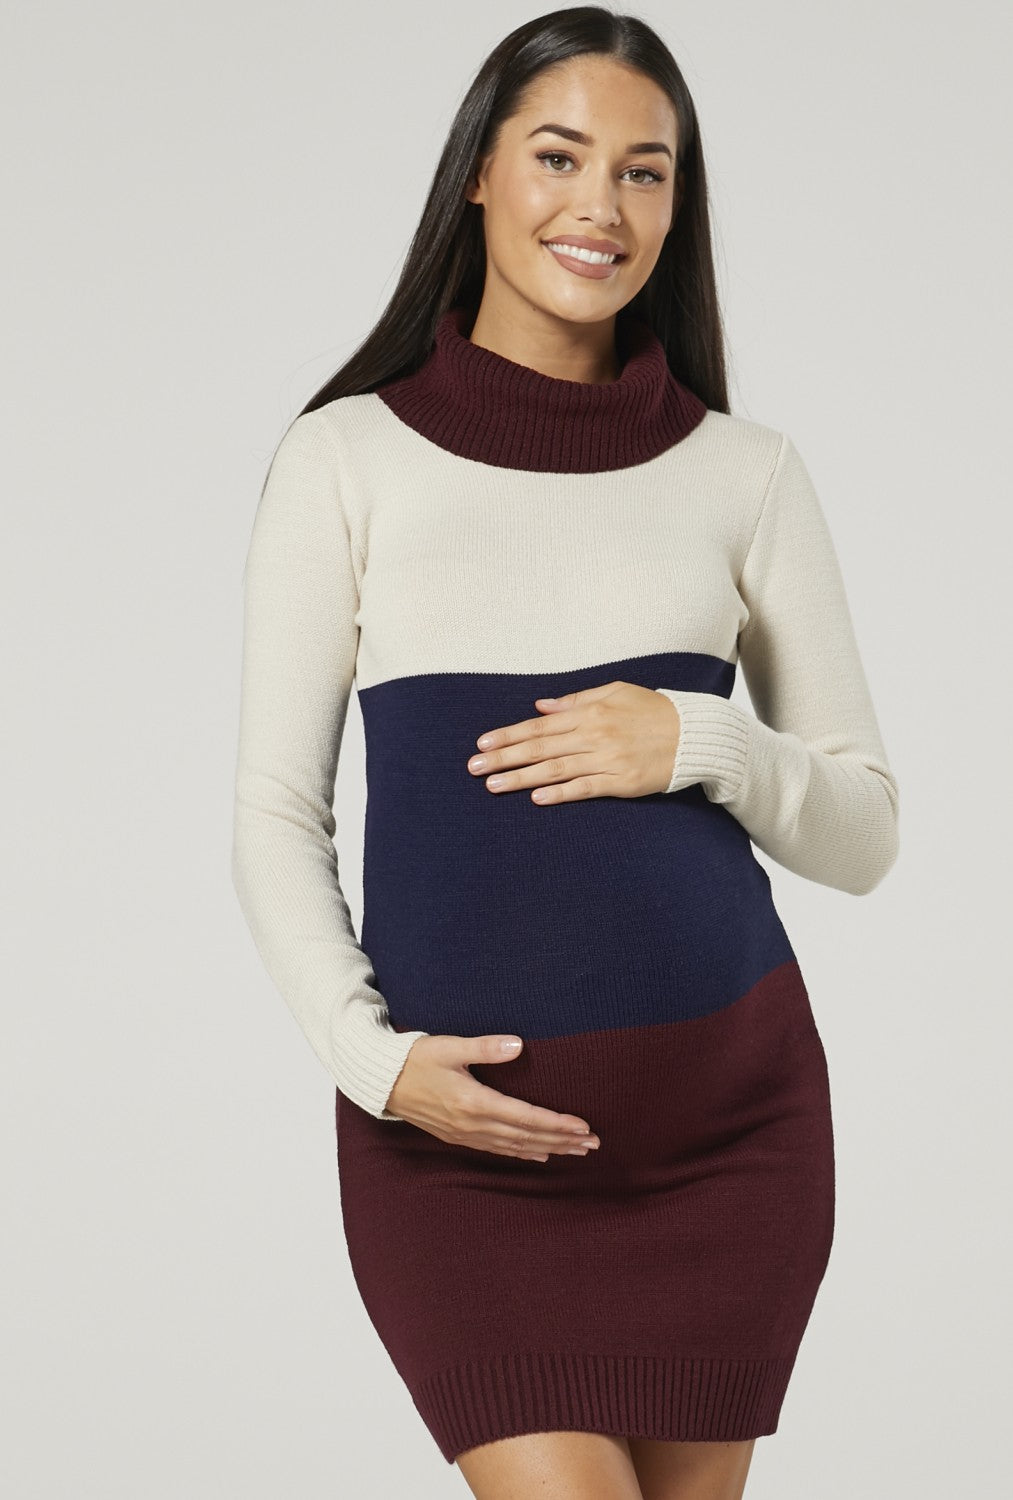 Women’s Maternity Knitted Jumper Dress